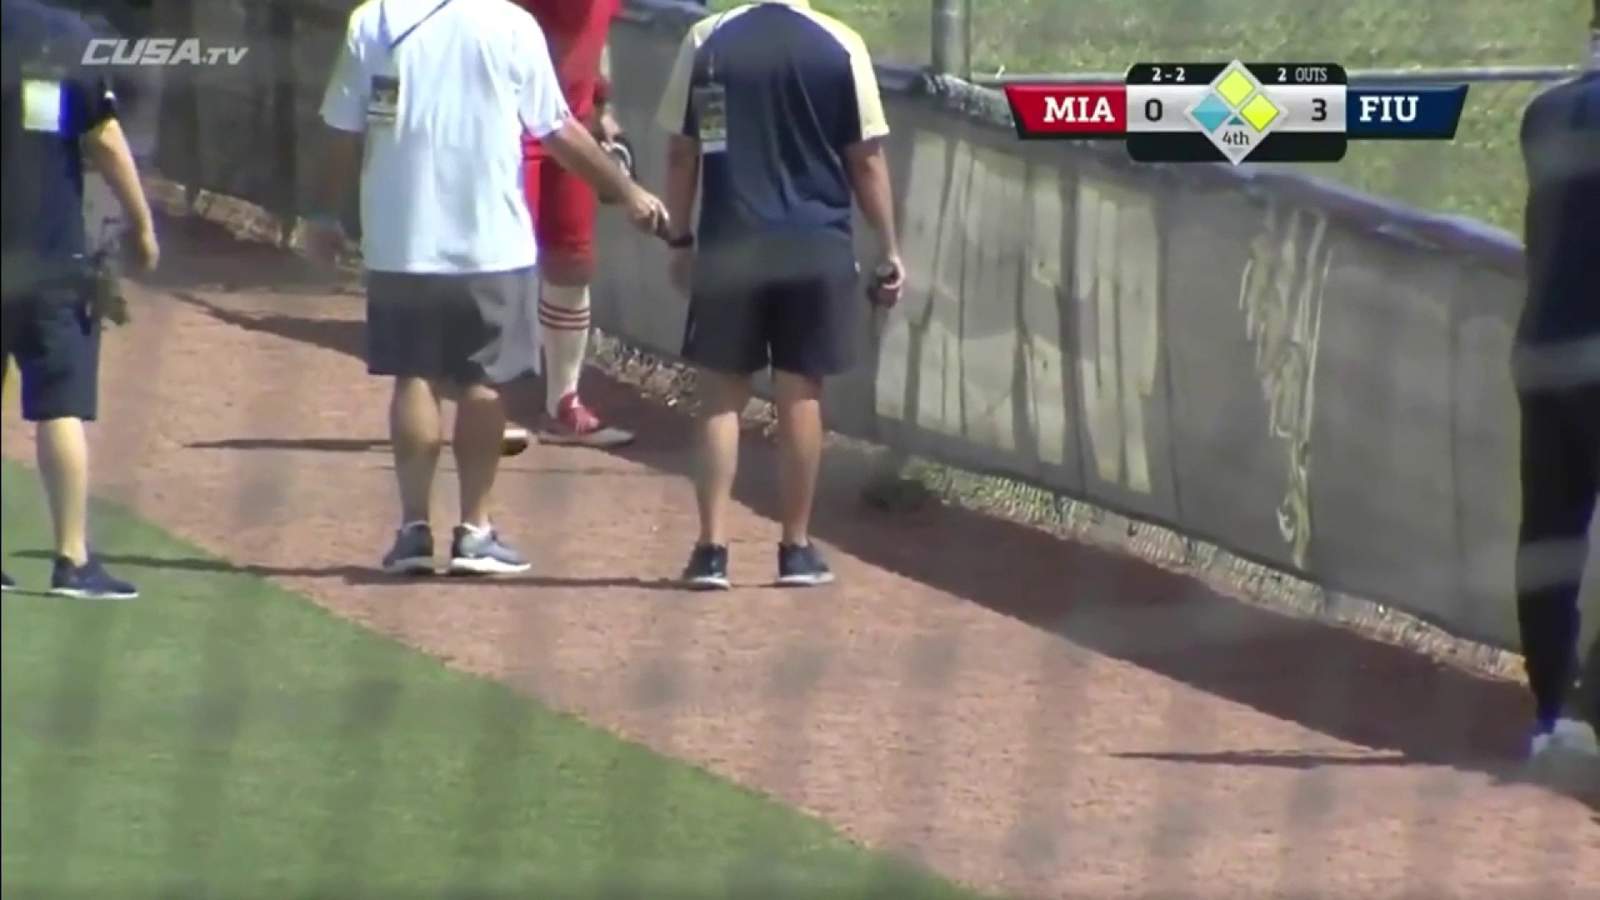 Iguana on the field interrupts FIU baseball game